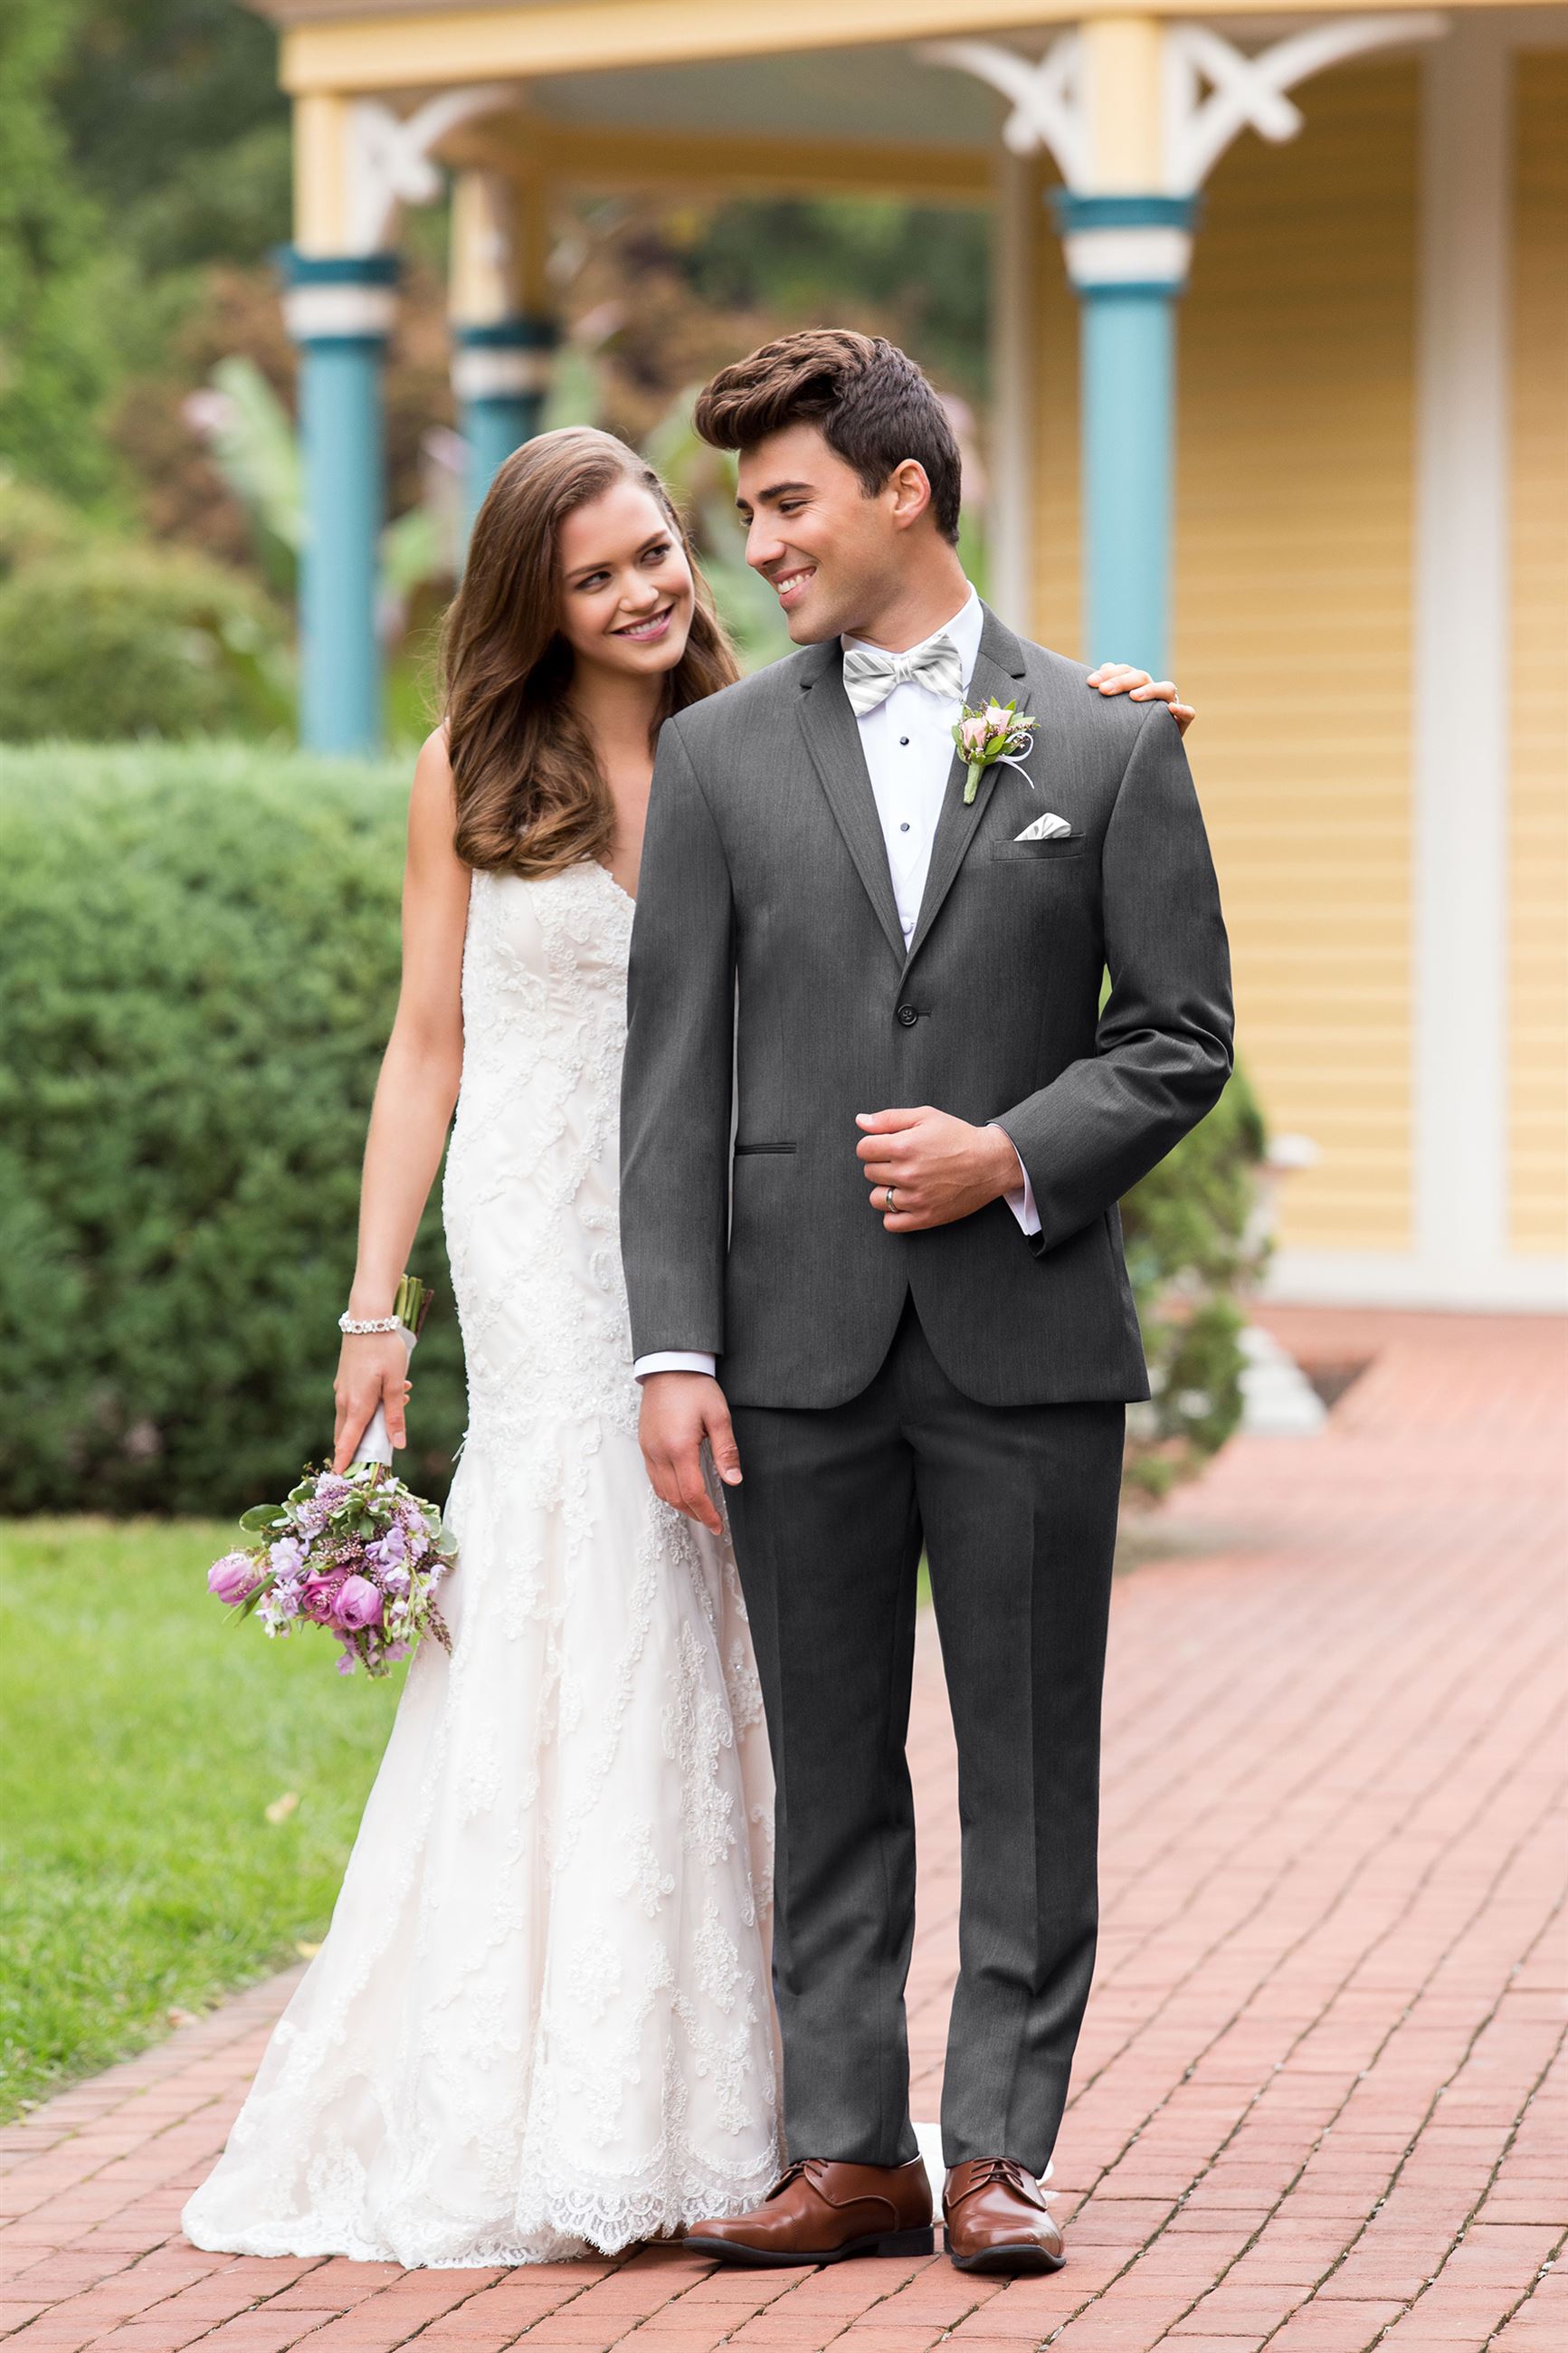 Jim's Formal Wear - ULTRA SLIM NAVY STERLING WEDDING SUIT - MICHAEL KORS